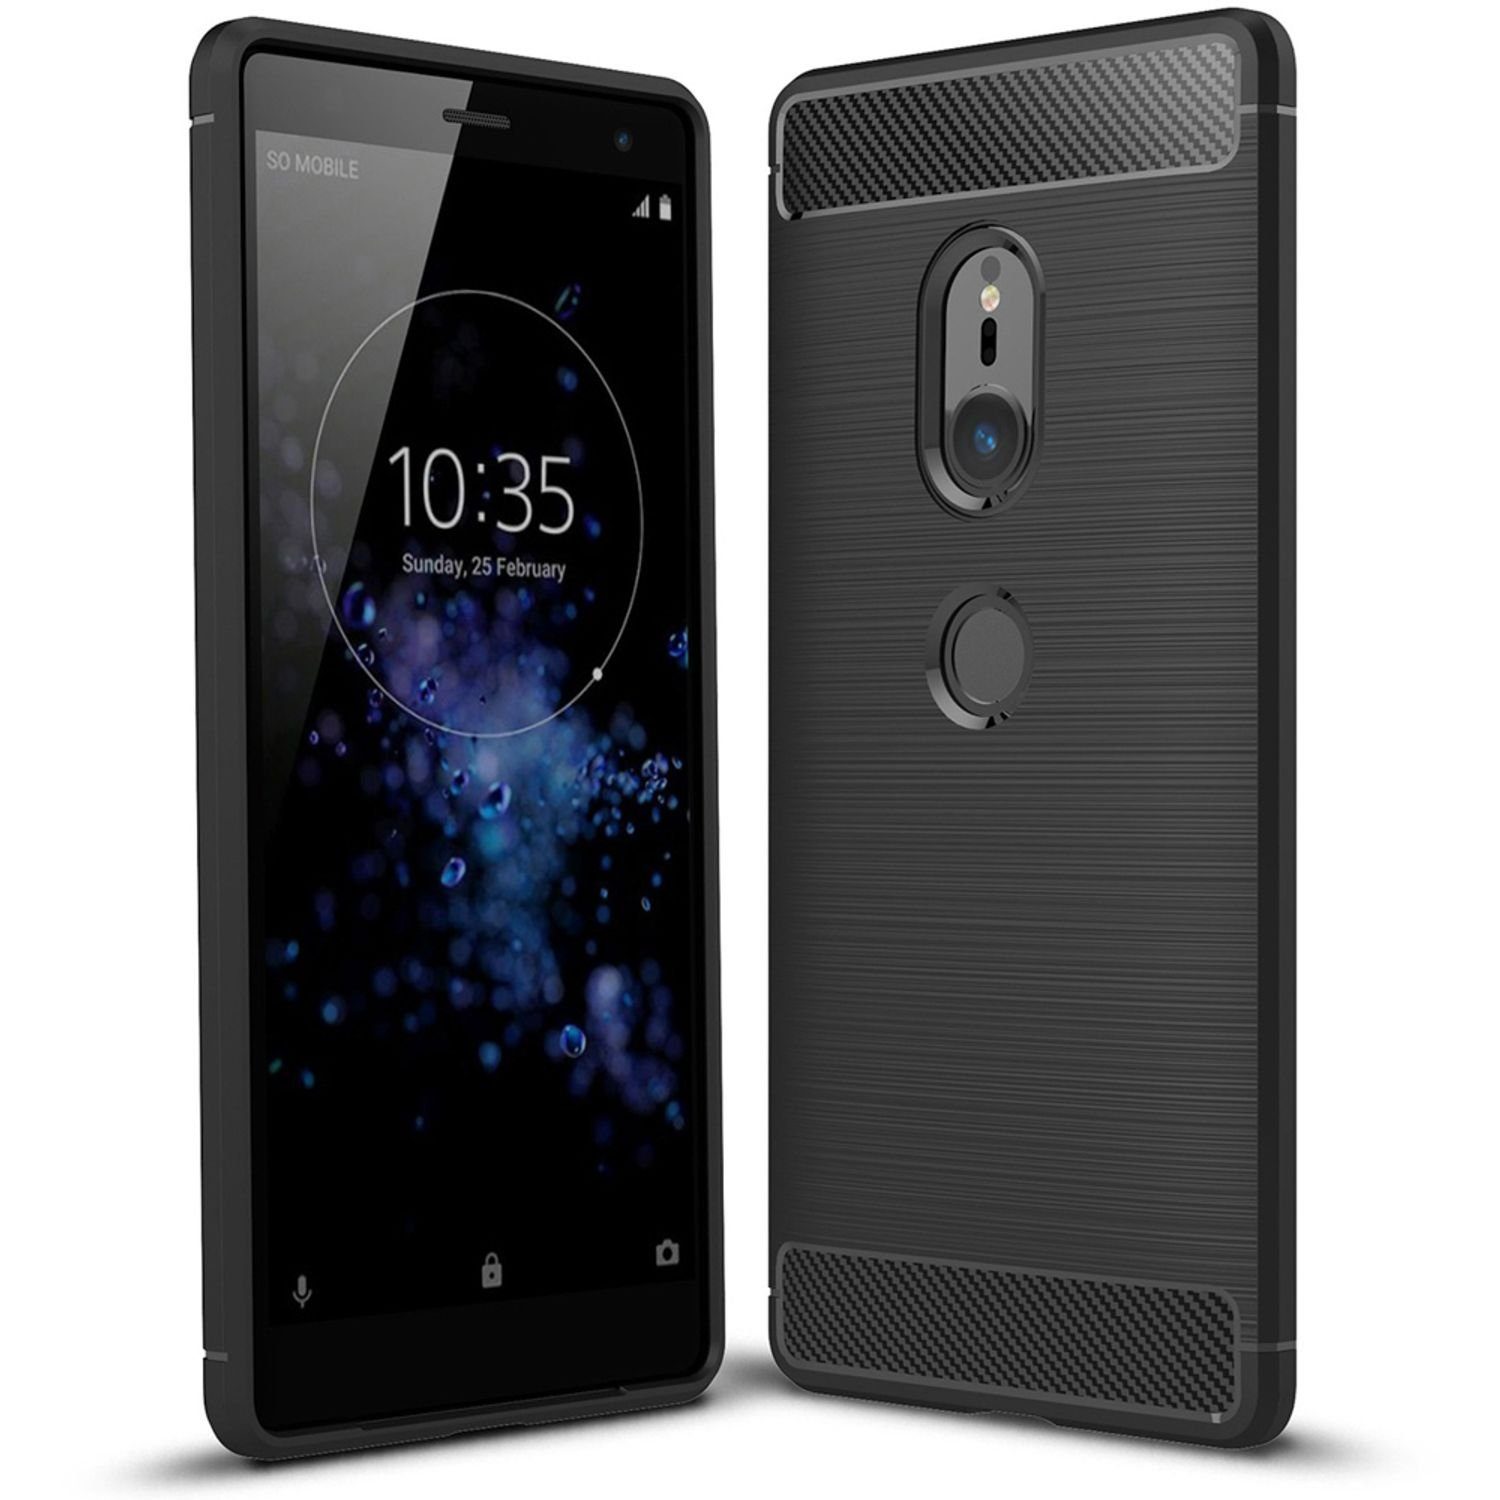 Nalia Smartphone-Hülle Sony Xperia XZ2, Carbon Look Silikon Hülle / Matt Schwarz / Rutschfest / Karbon Optik